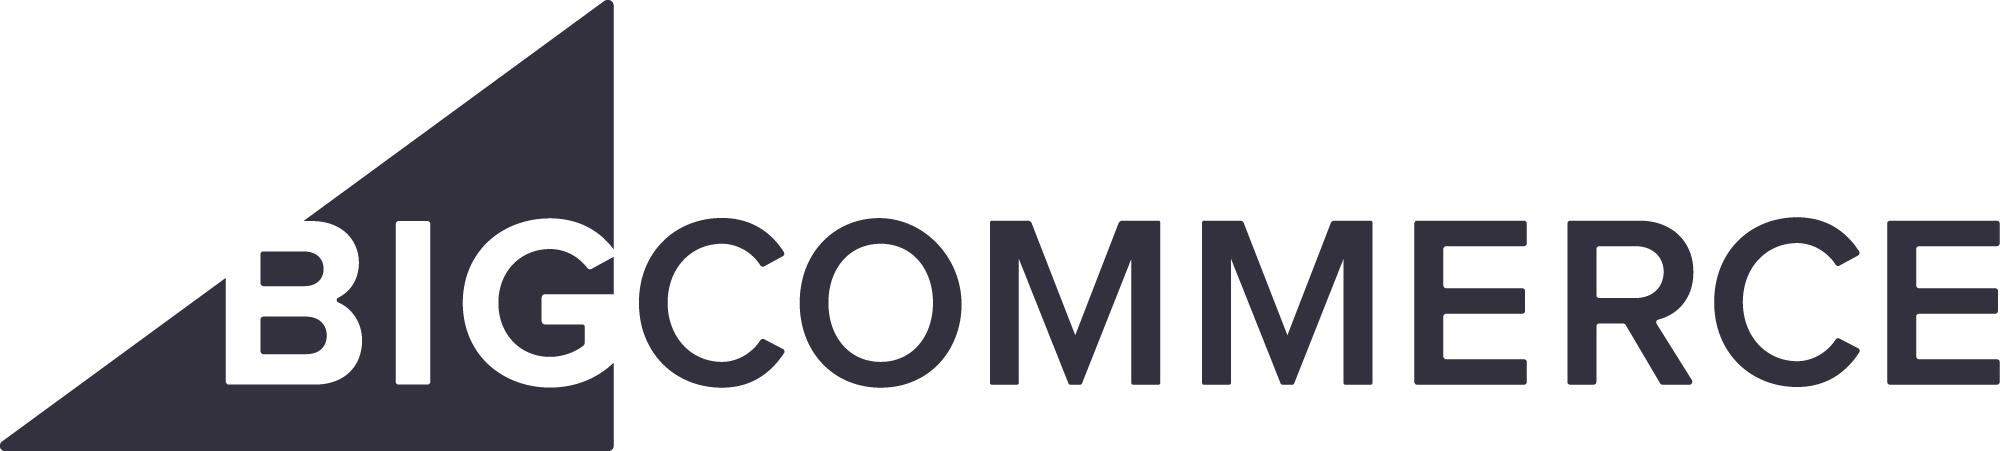 Bigcommerce logo dark